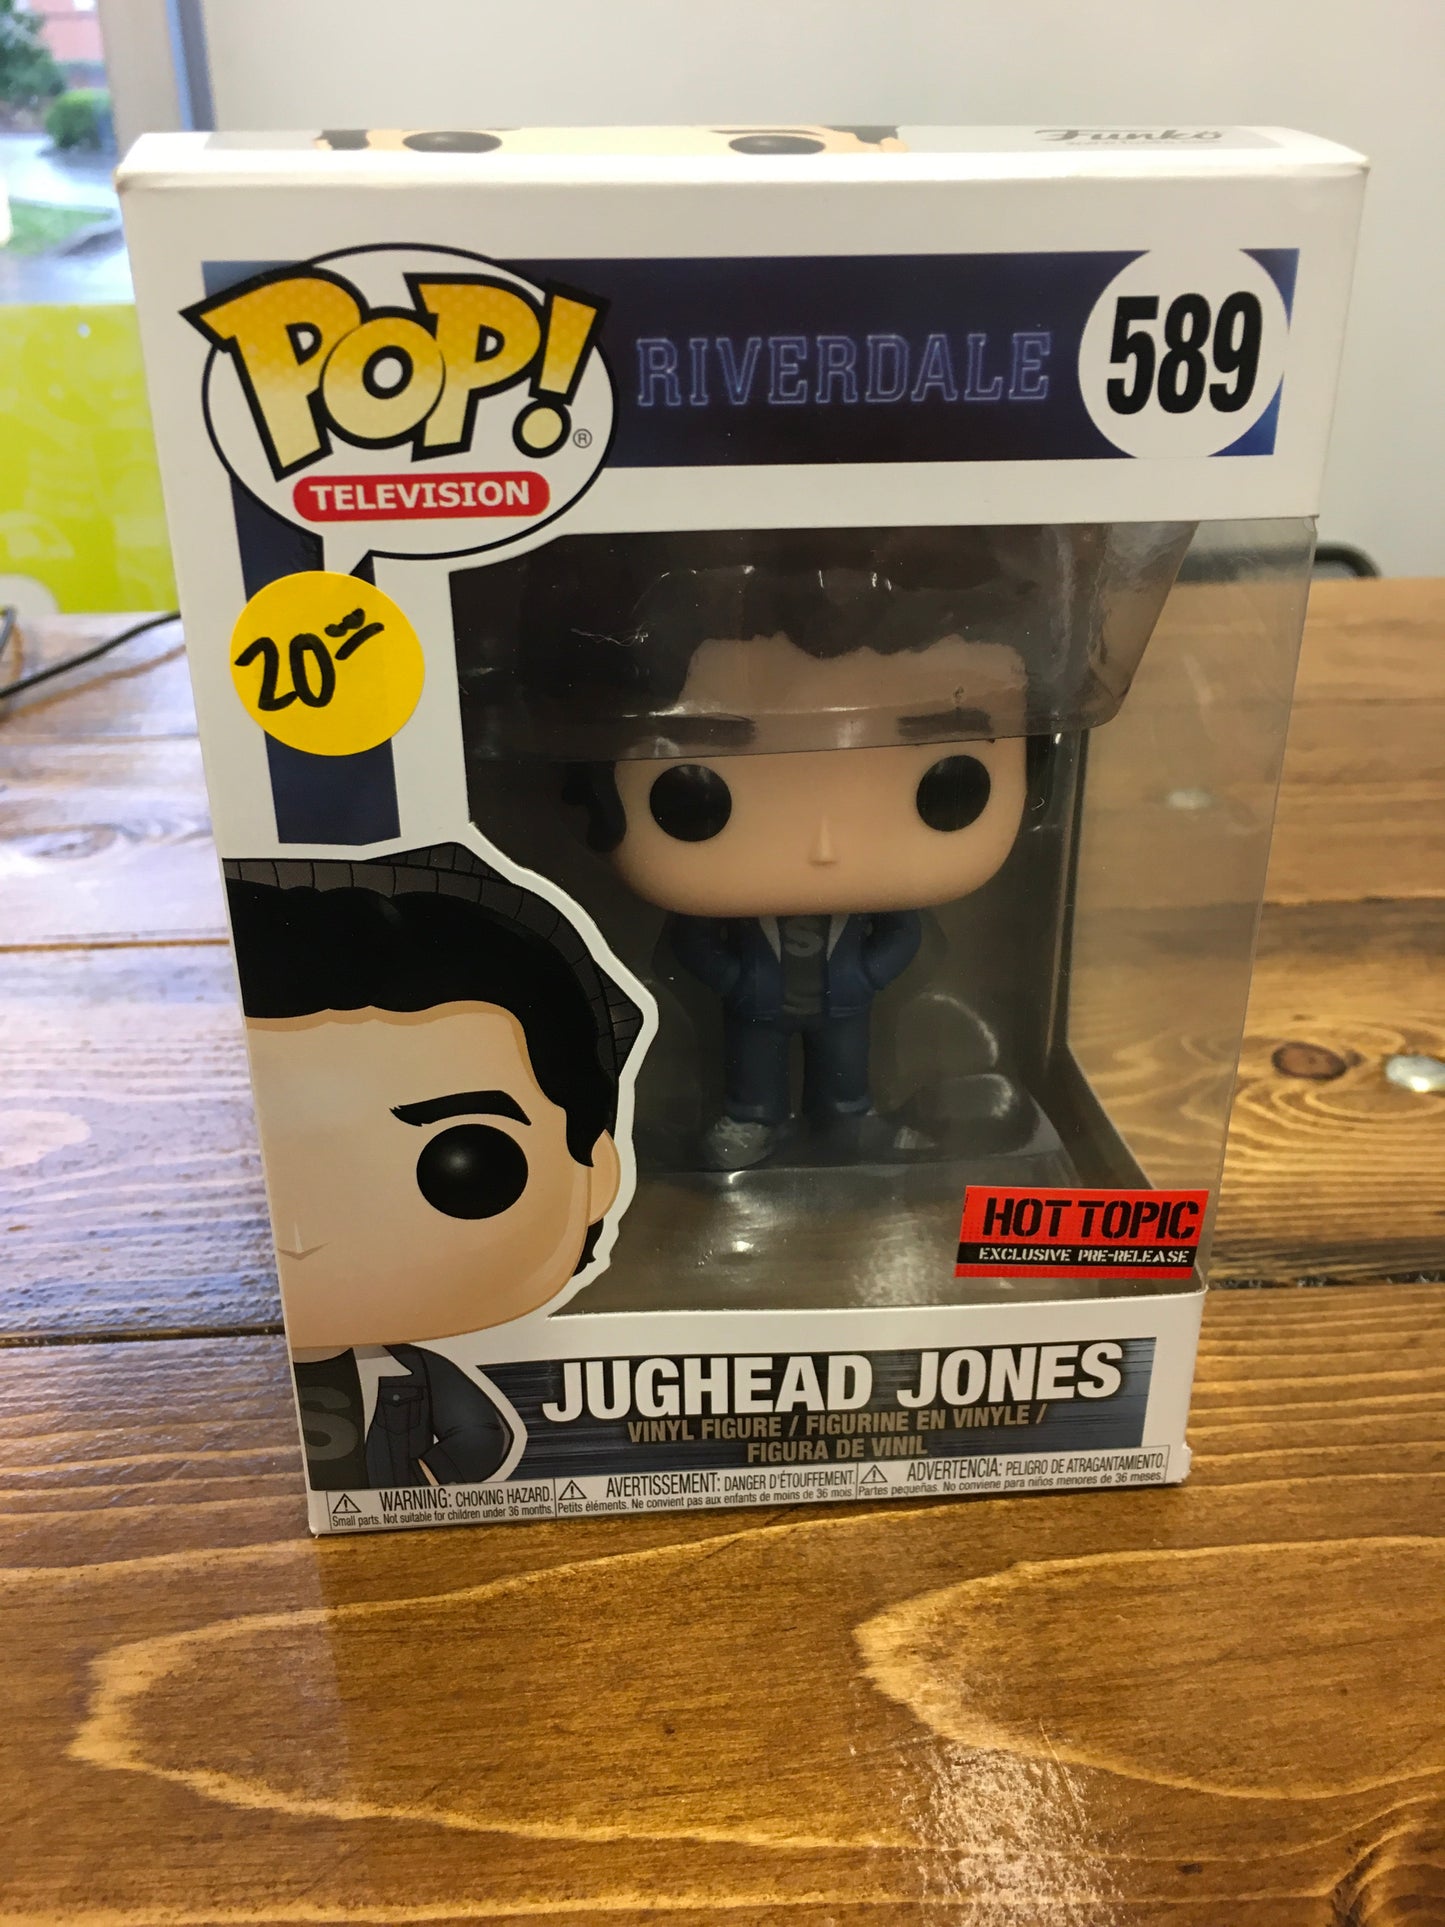 Riverdale Jughead Jones 589 Funko Pop! Vinyl figure television